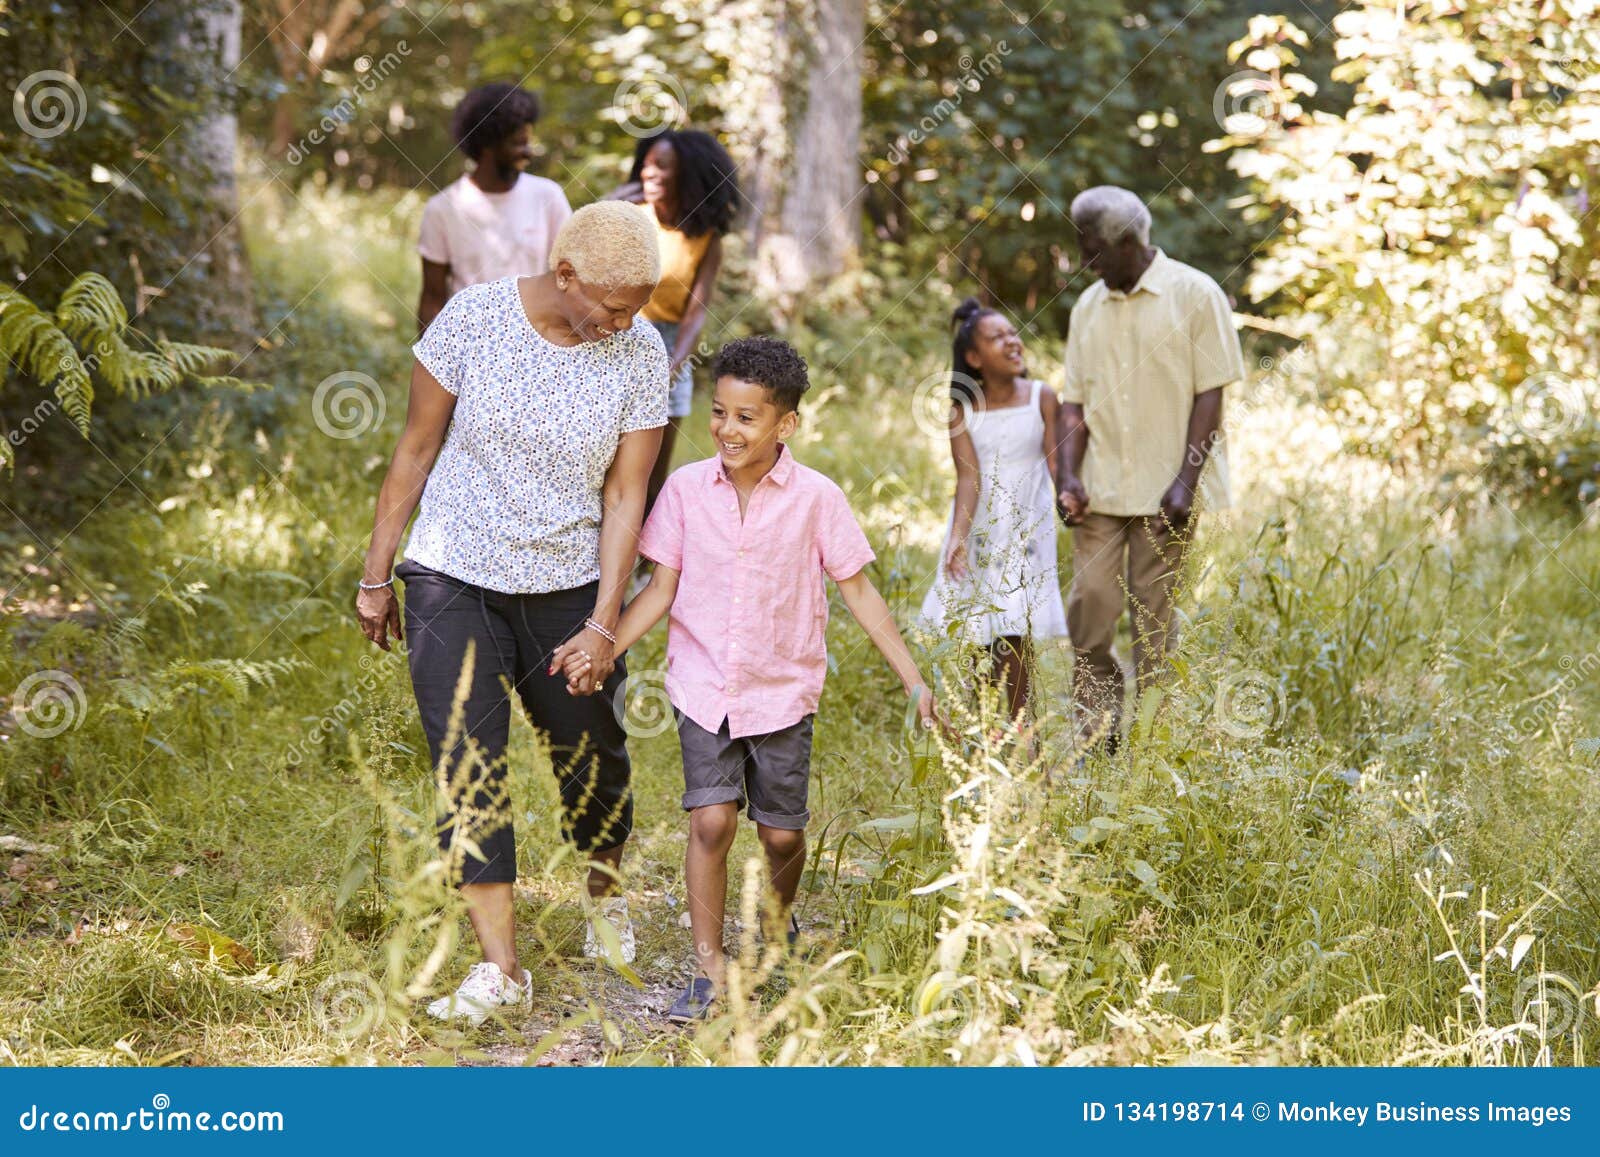 black grandma walking with grandson and family, full length